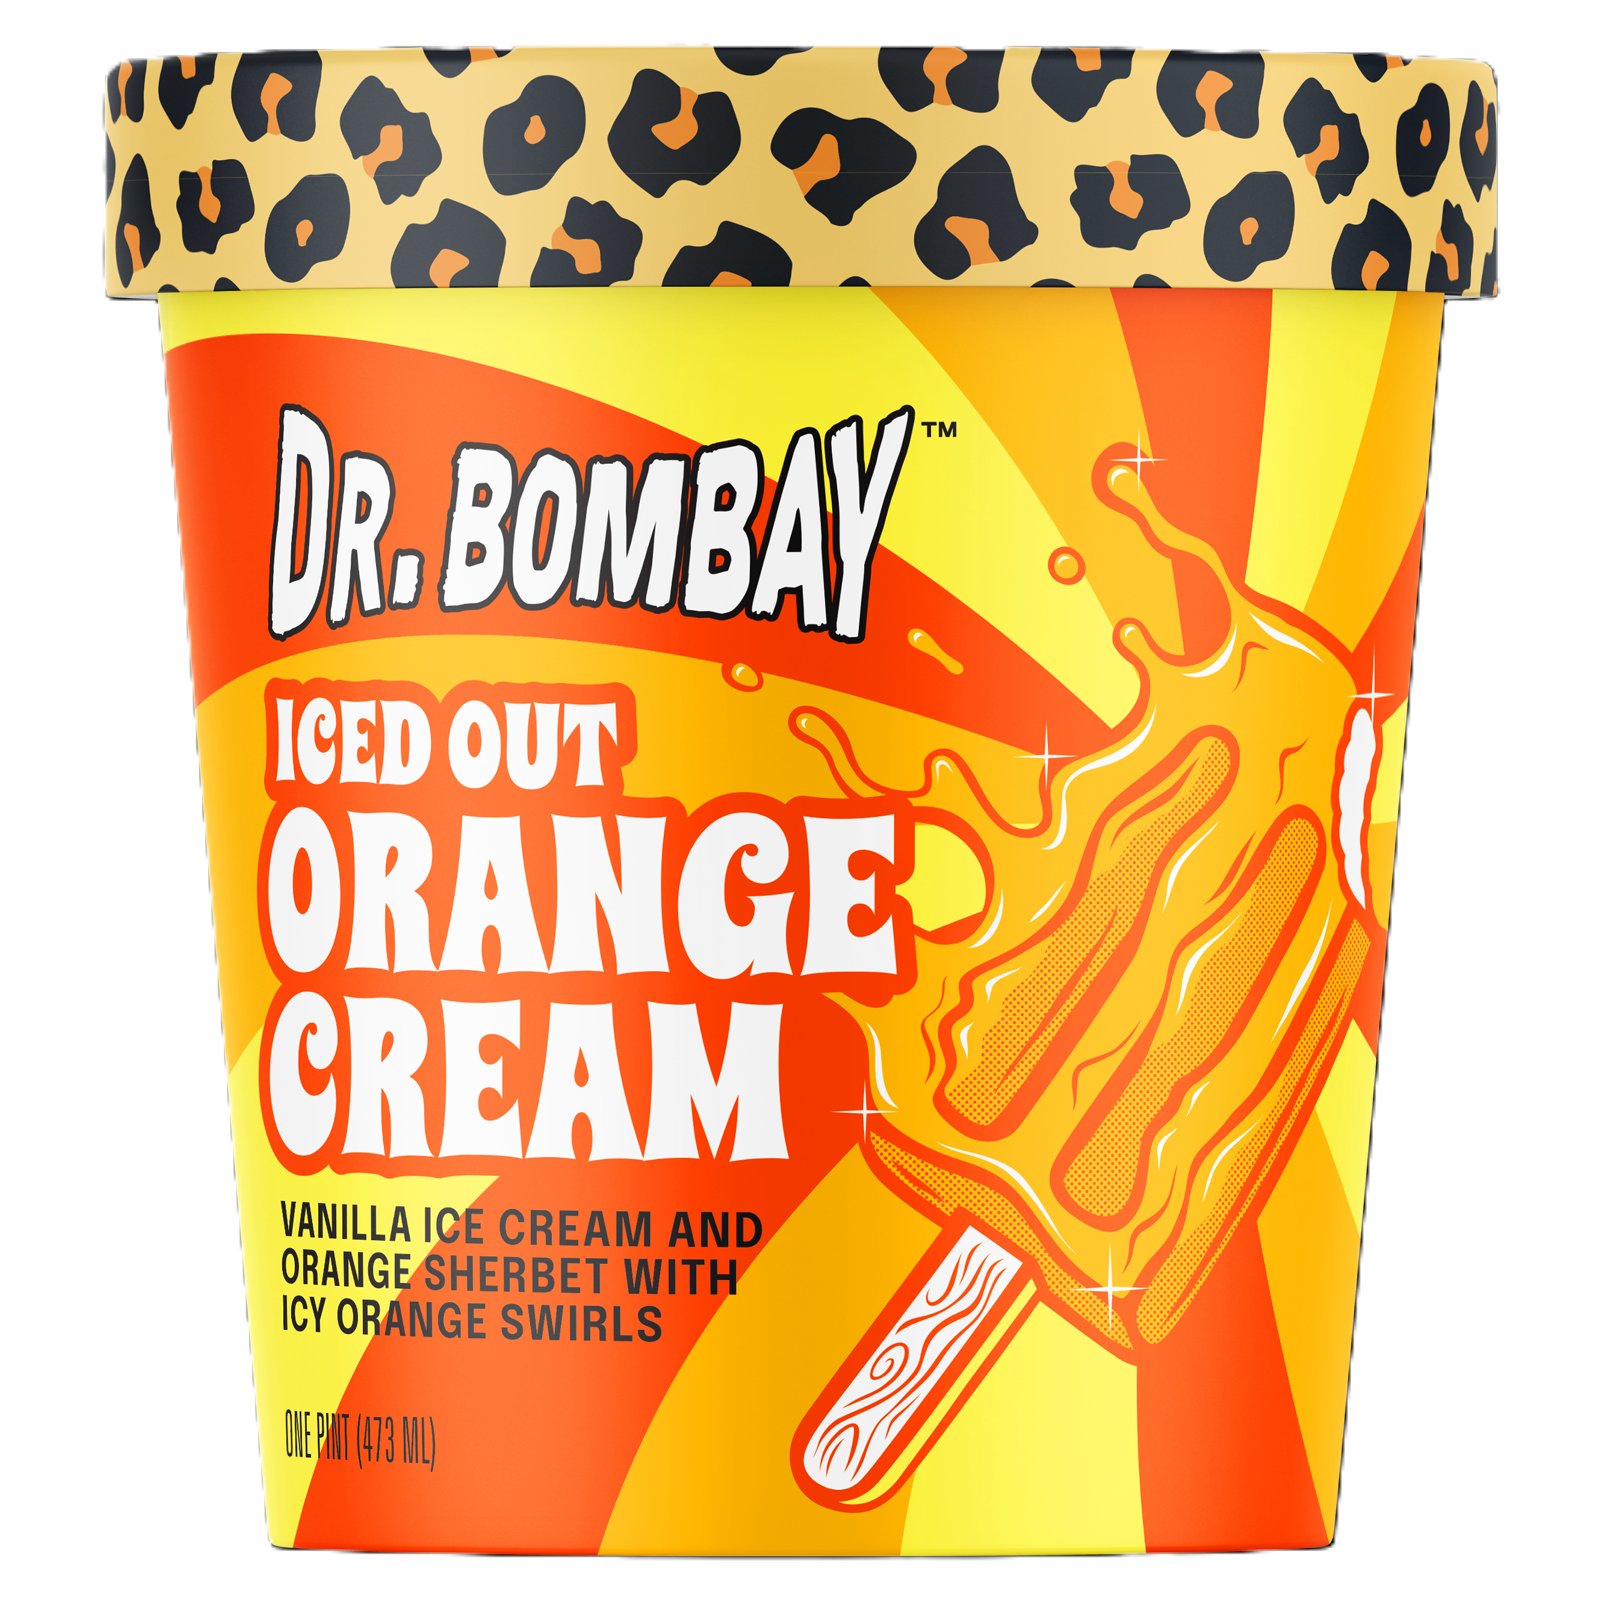 Dr. Bombay Iced Out Orange Cream Ice Cream Pint